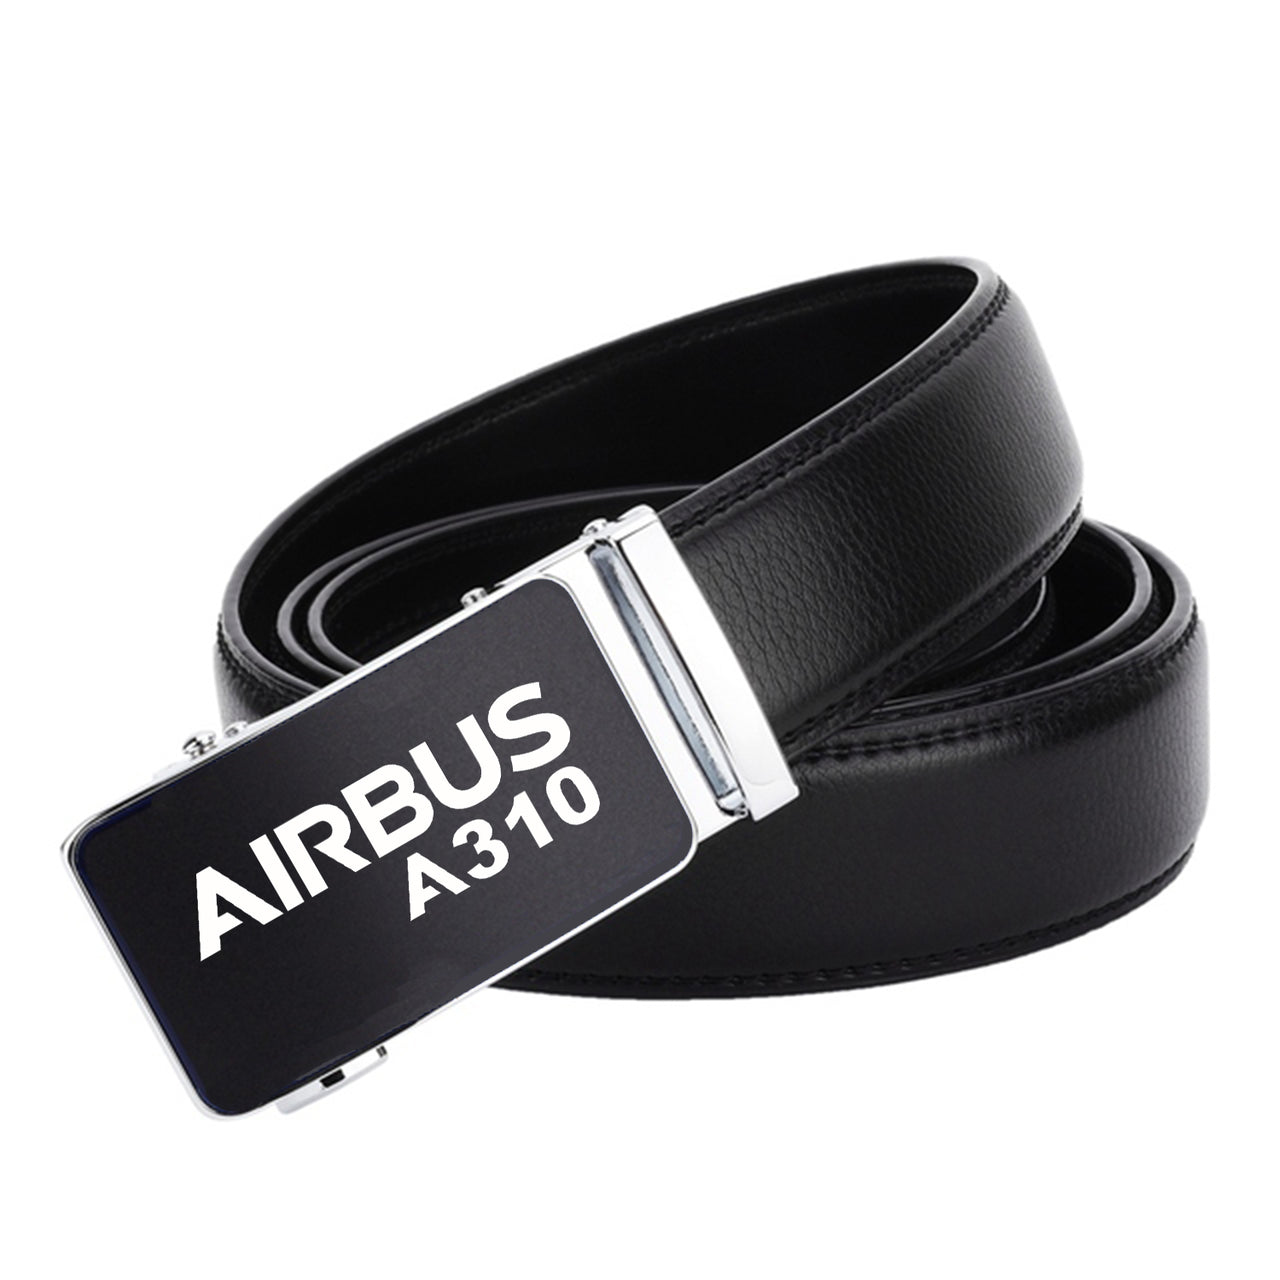 Airbus A310 & Text Designed Men Belts